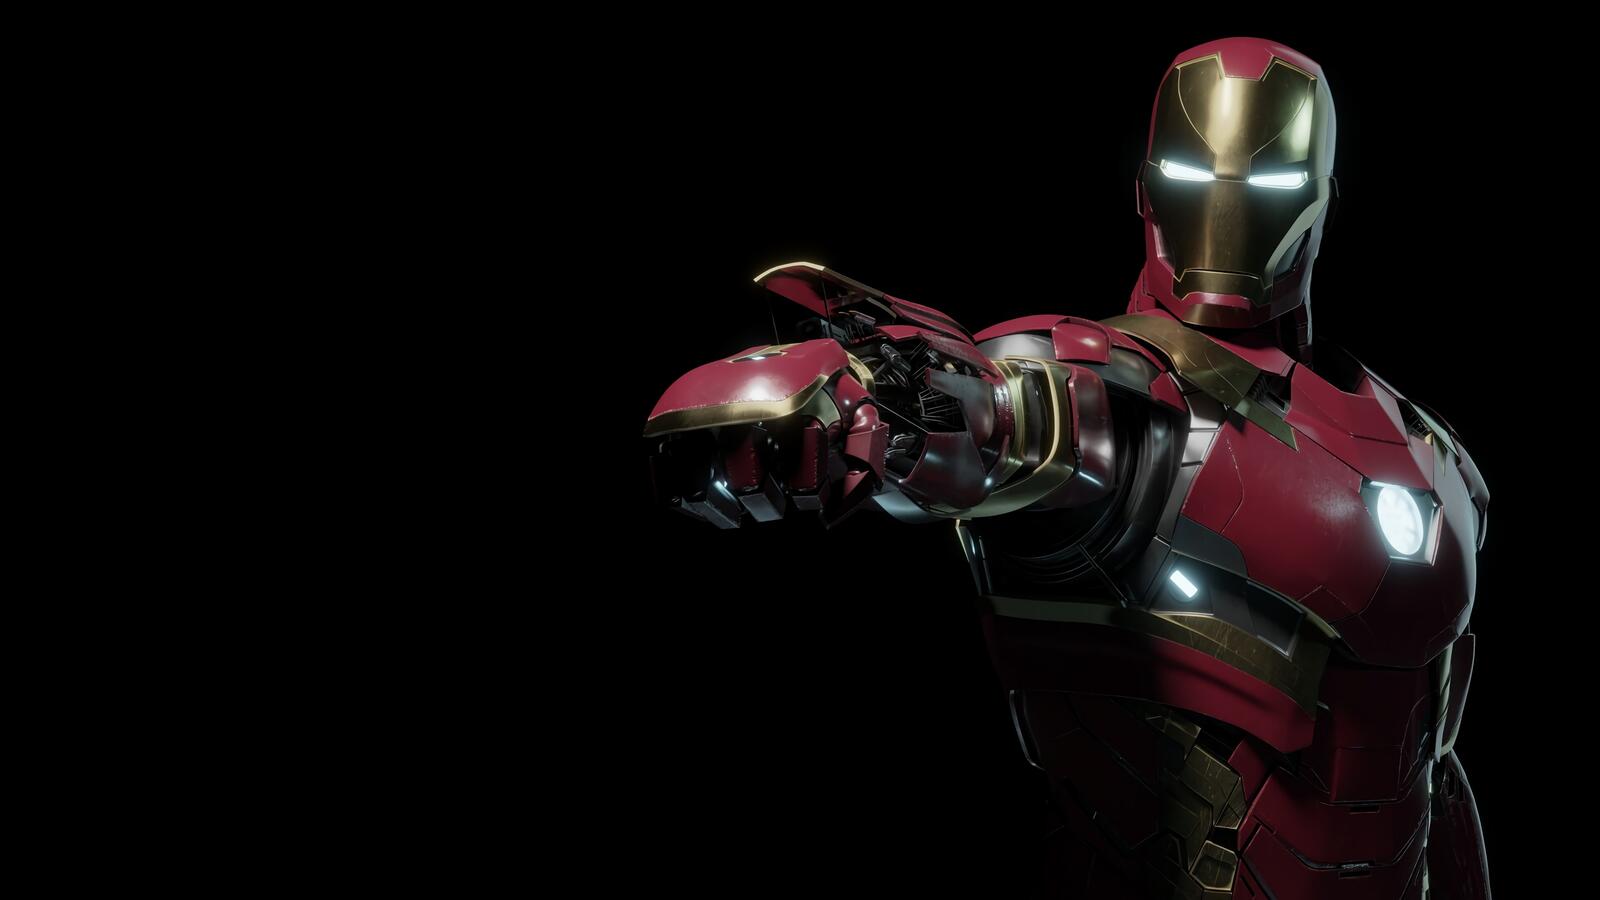 Wallpapers Iron Man suit hand on the desktop